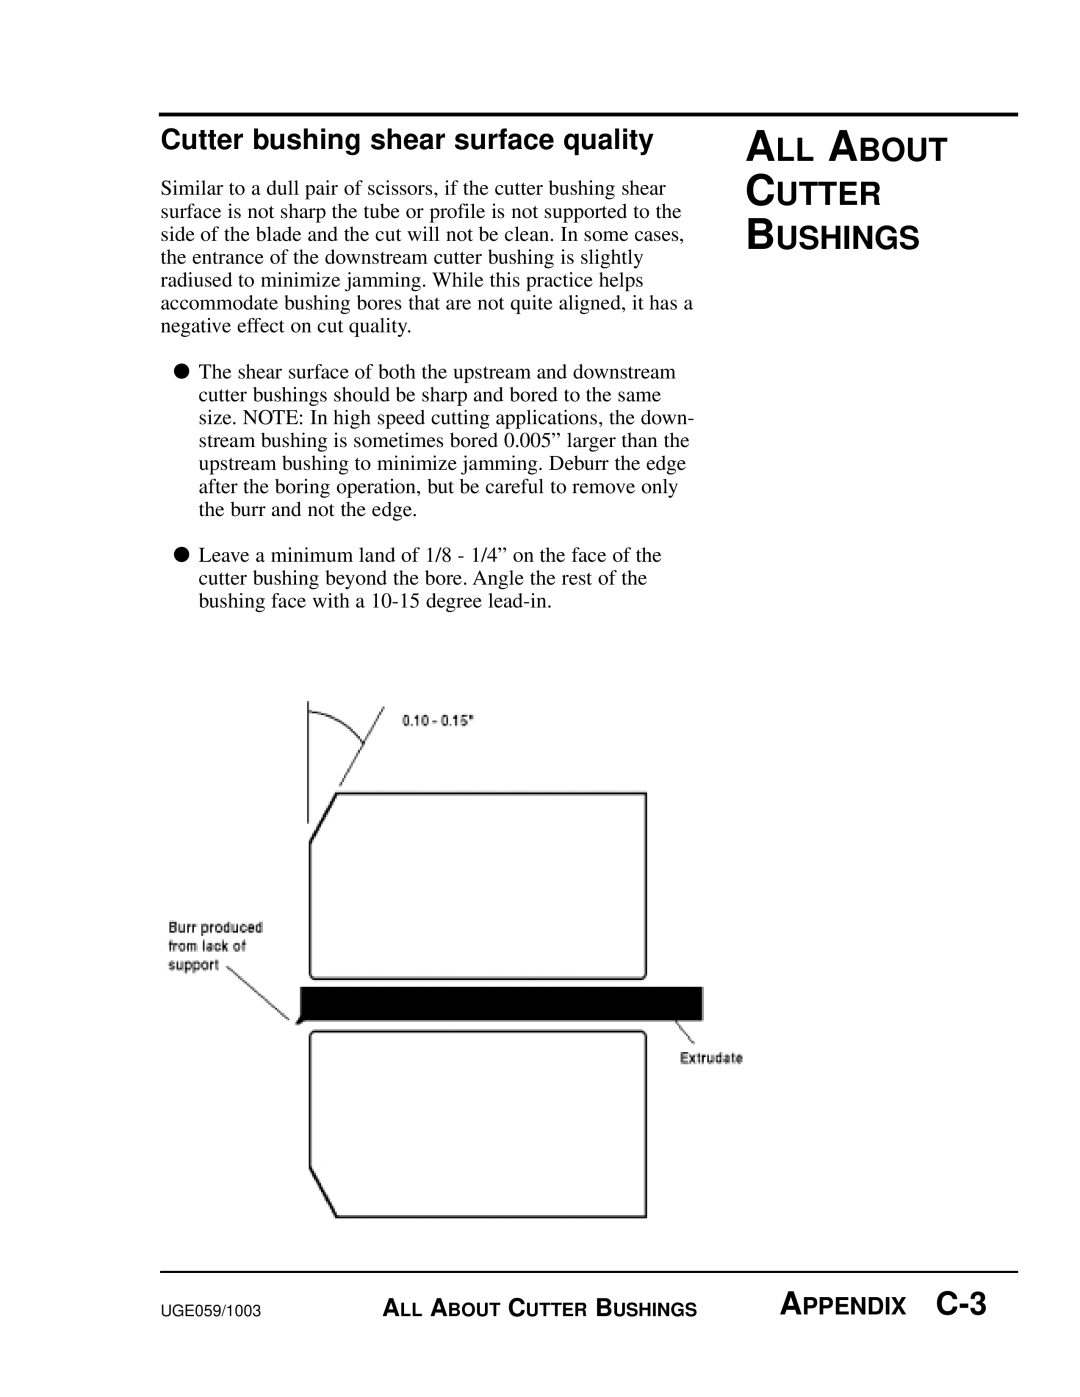 Conair SC-5 manual Cutter bushing shear surface quality, APPENDIX C-3, All About Cutter Bushings 